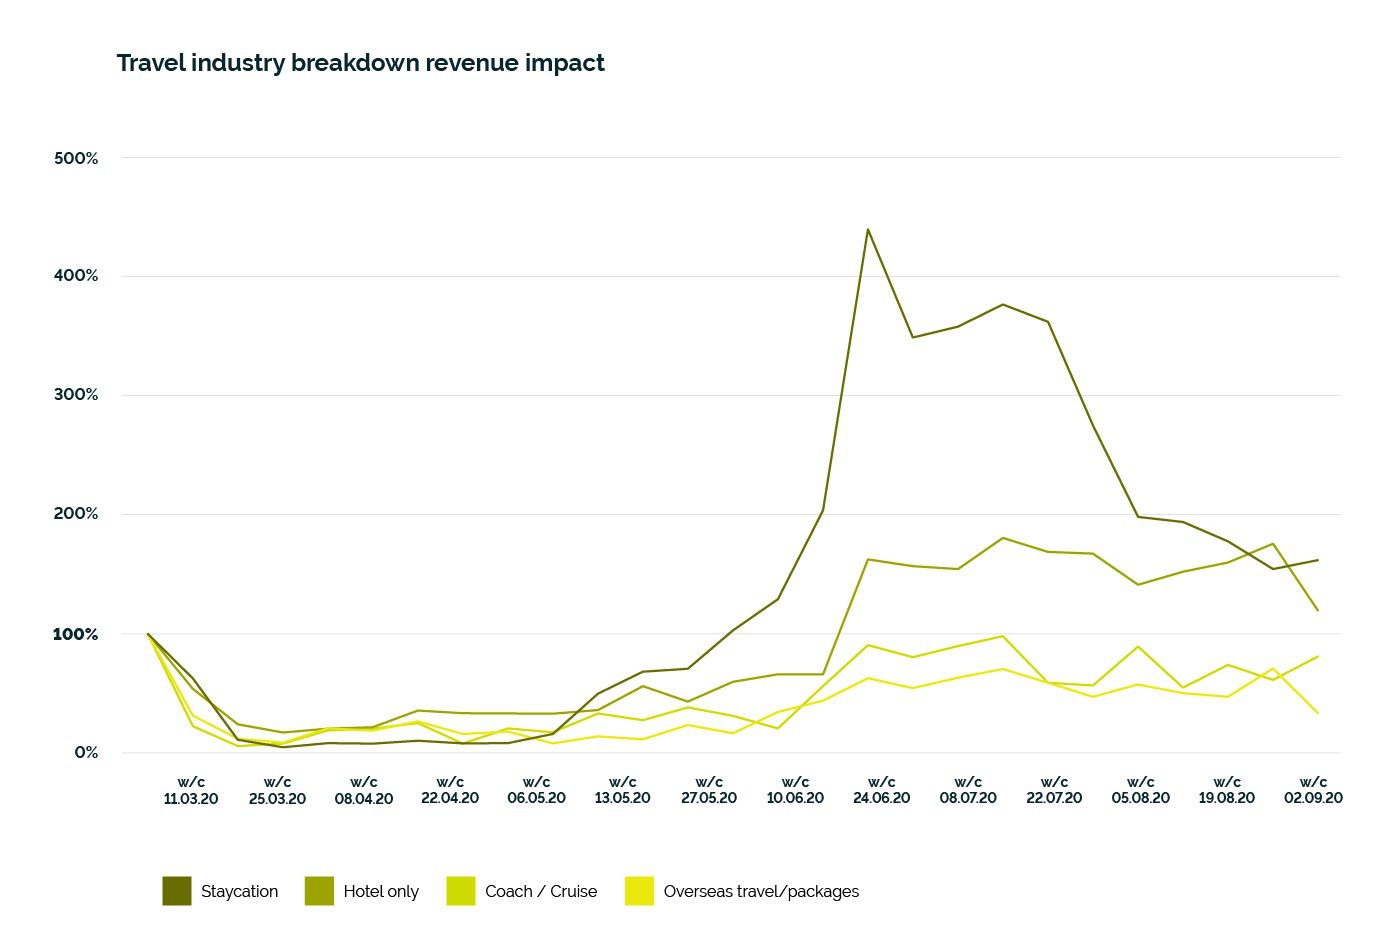 Travel industry breakdown revenue impact